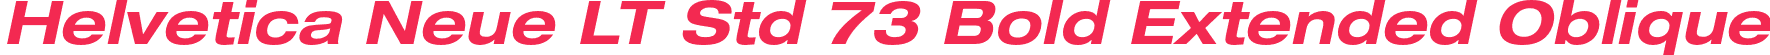 Helvetica Neue LT Std 73 Bold Extended Oblique